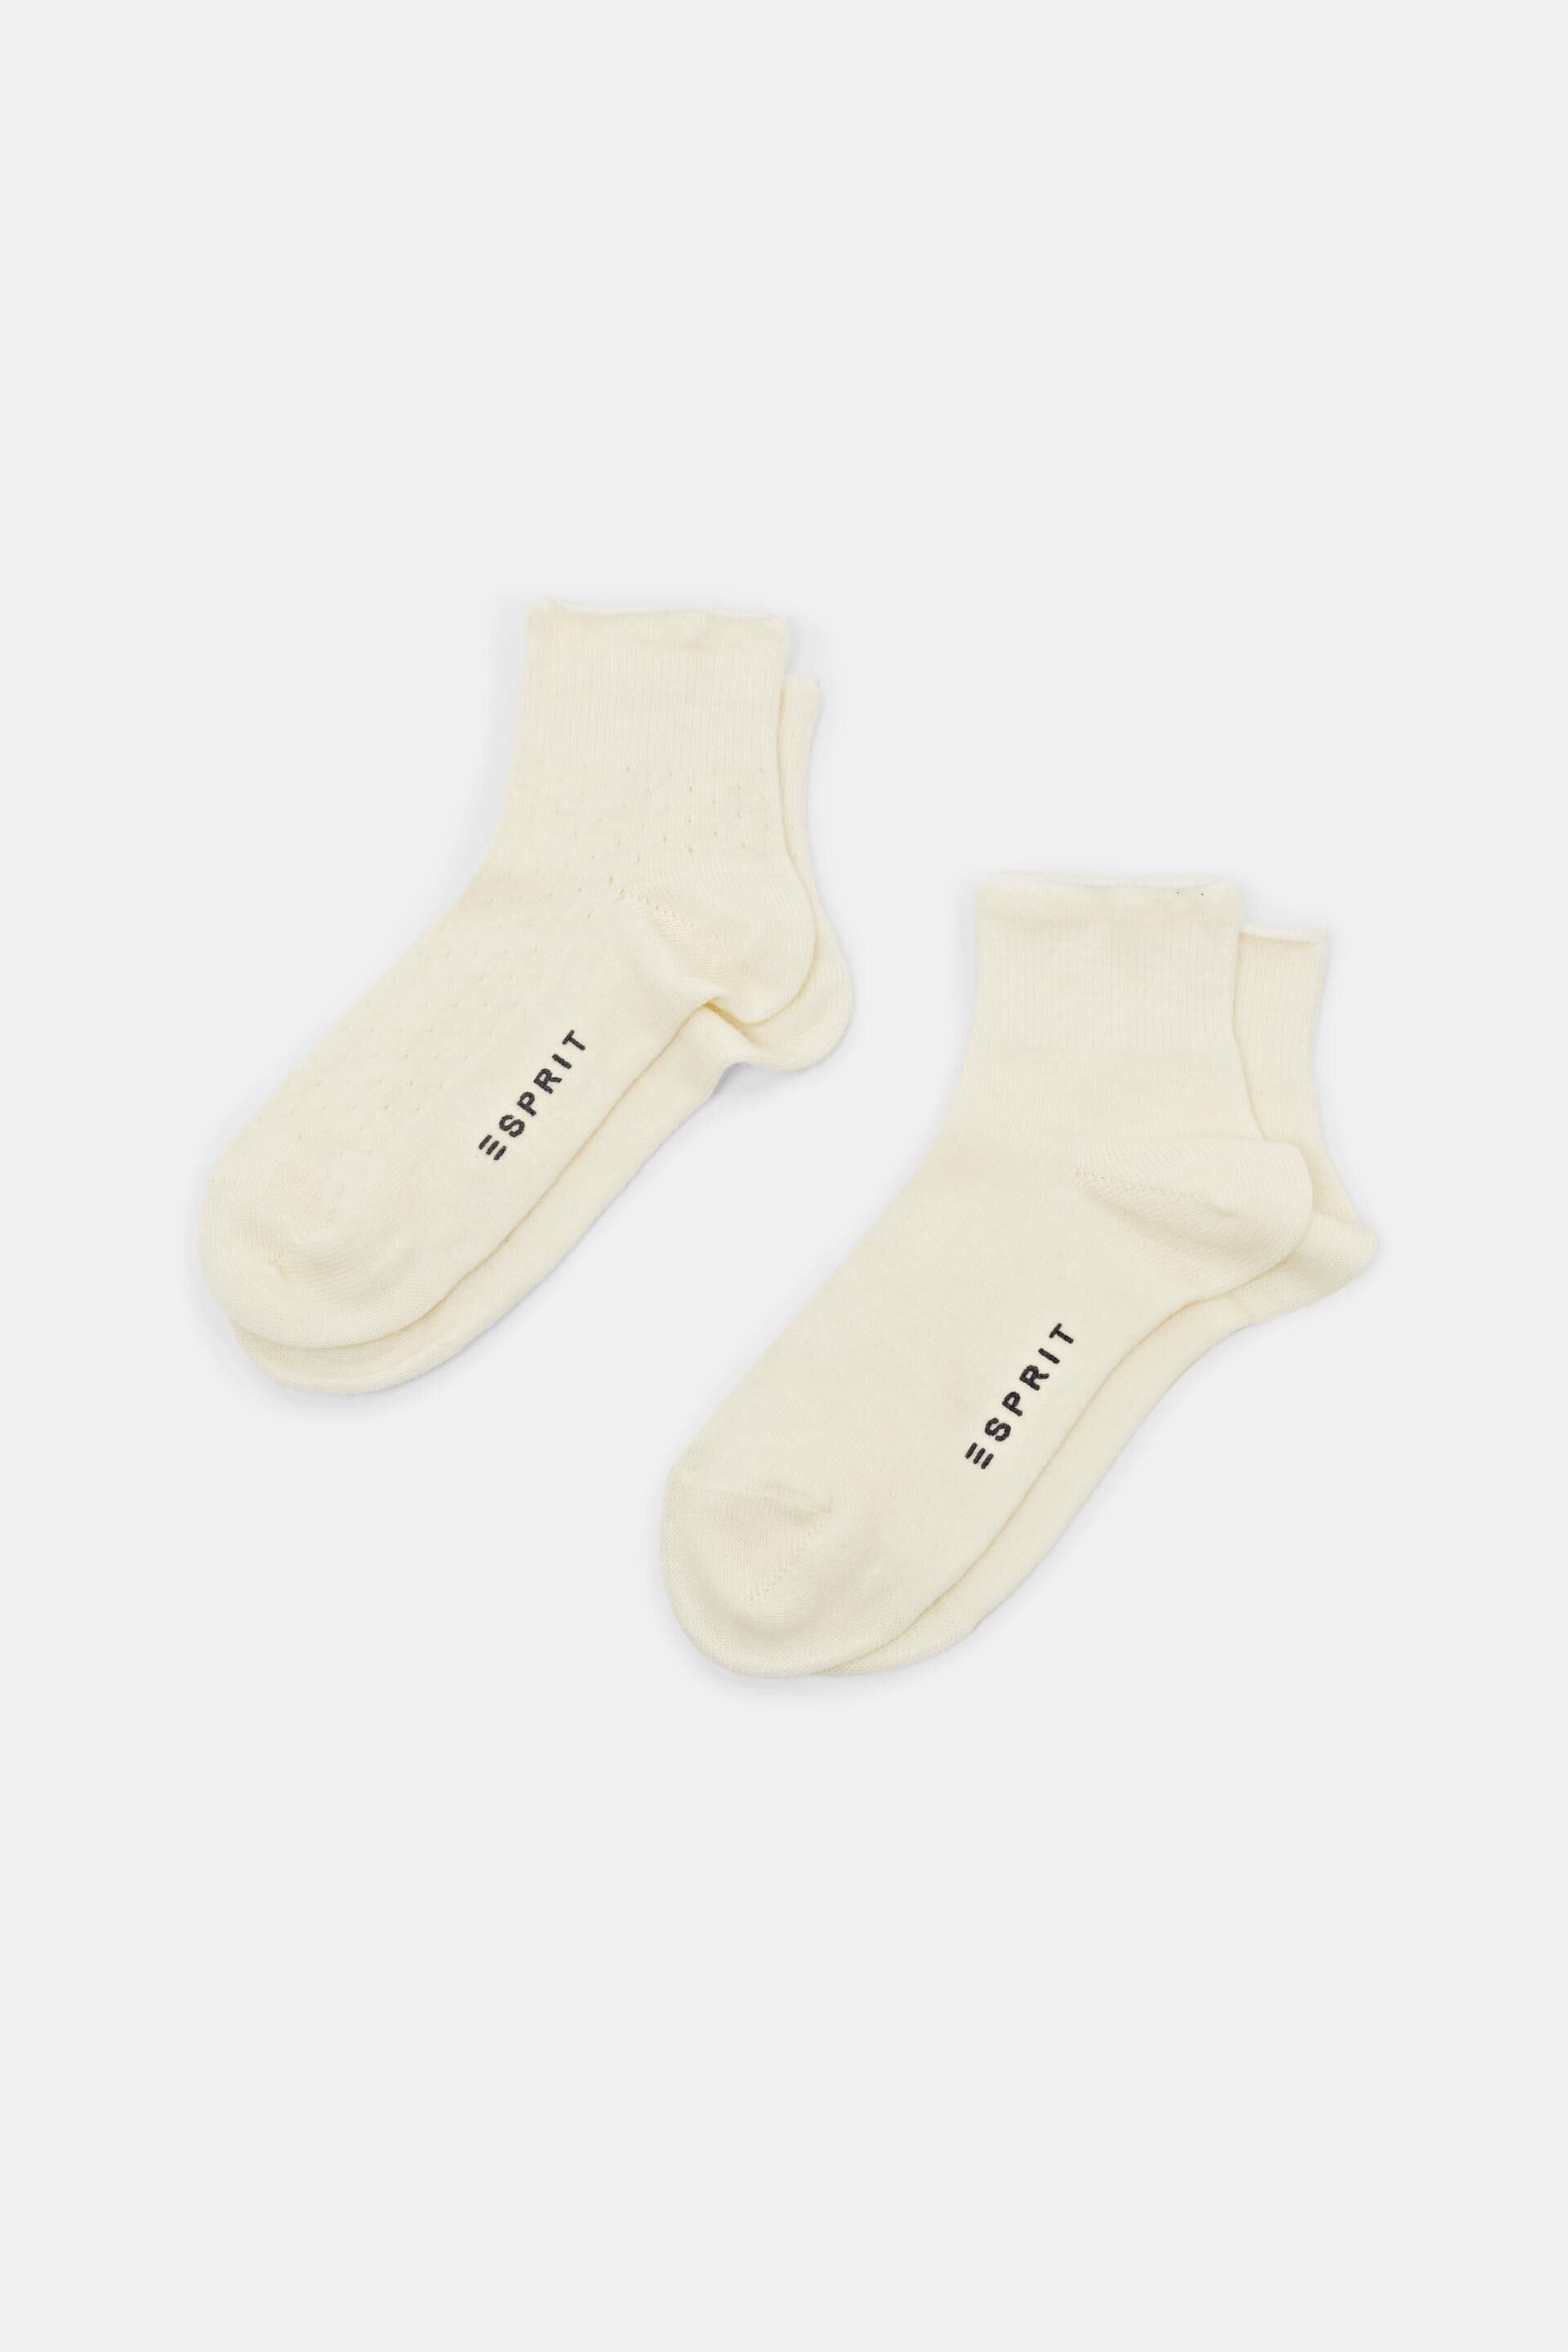 Esprit socks, lace blend wool pattern of 2-pack